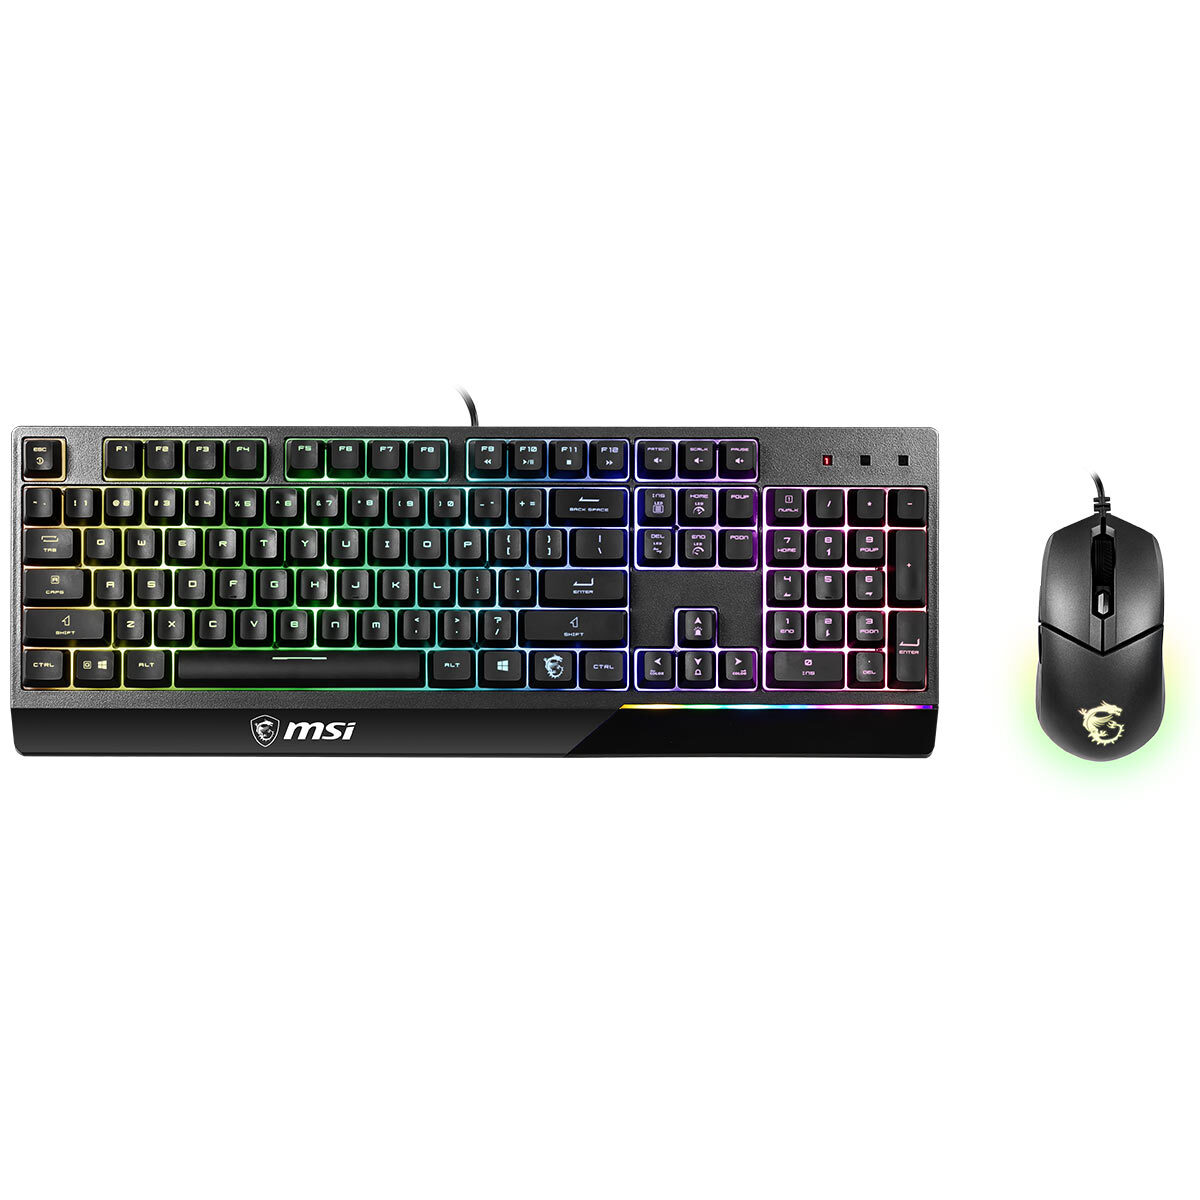 Buy MSI Vigor GK30 COMBO RGB Mechanical Gaming Keyboard & Clutch GM11 Gaming Mouse at Costco.co.uk